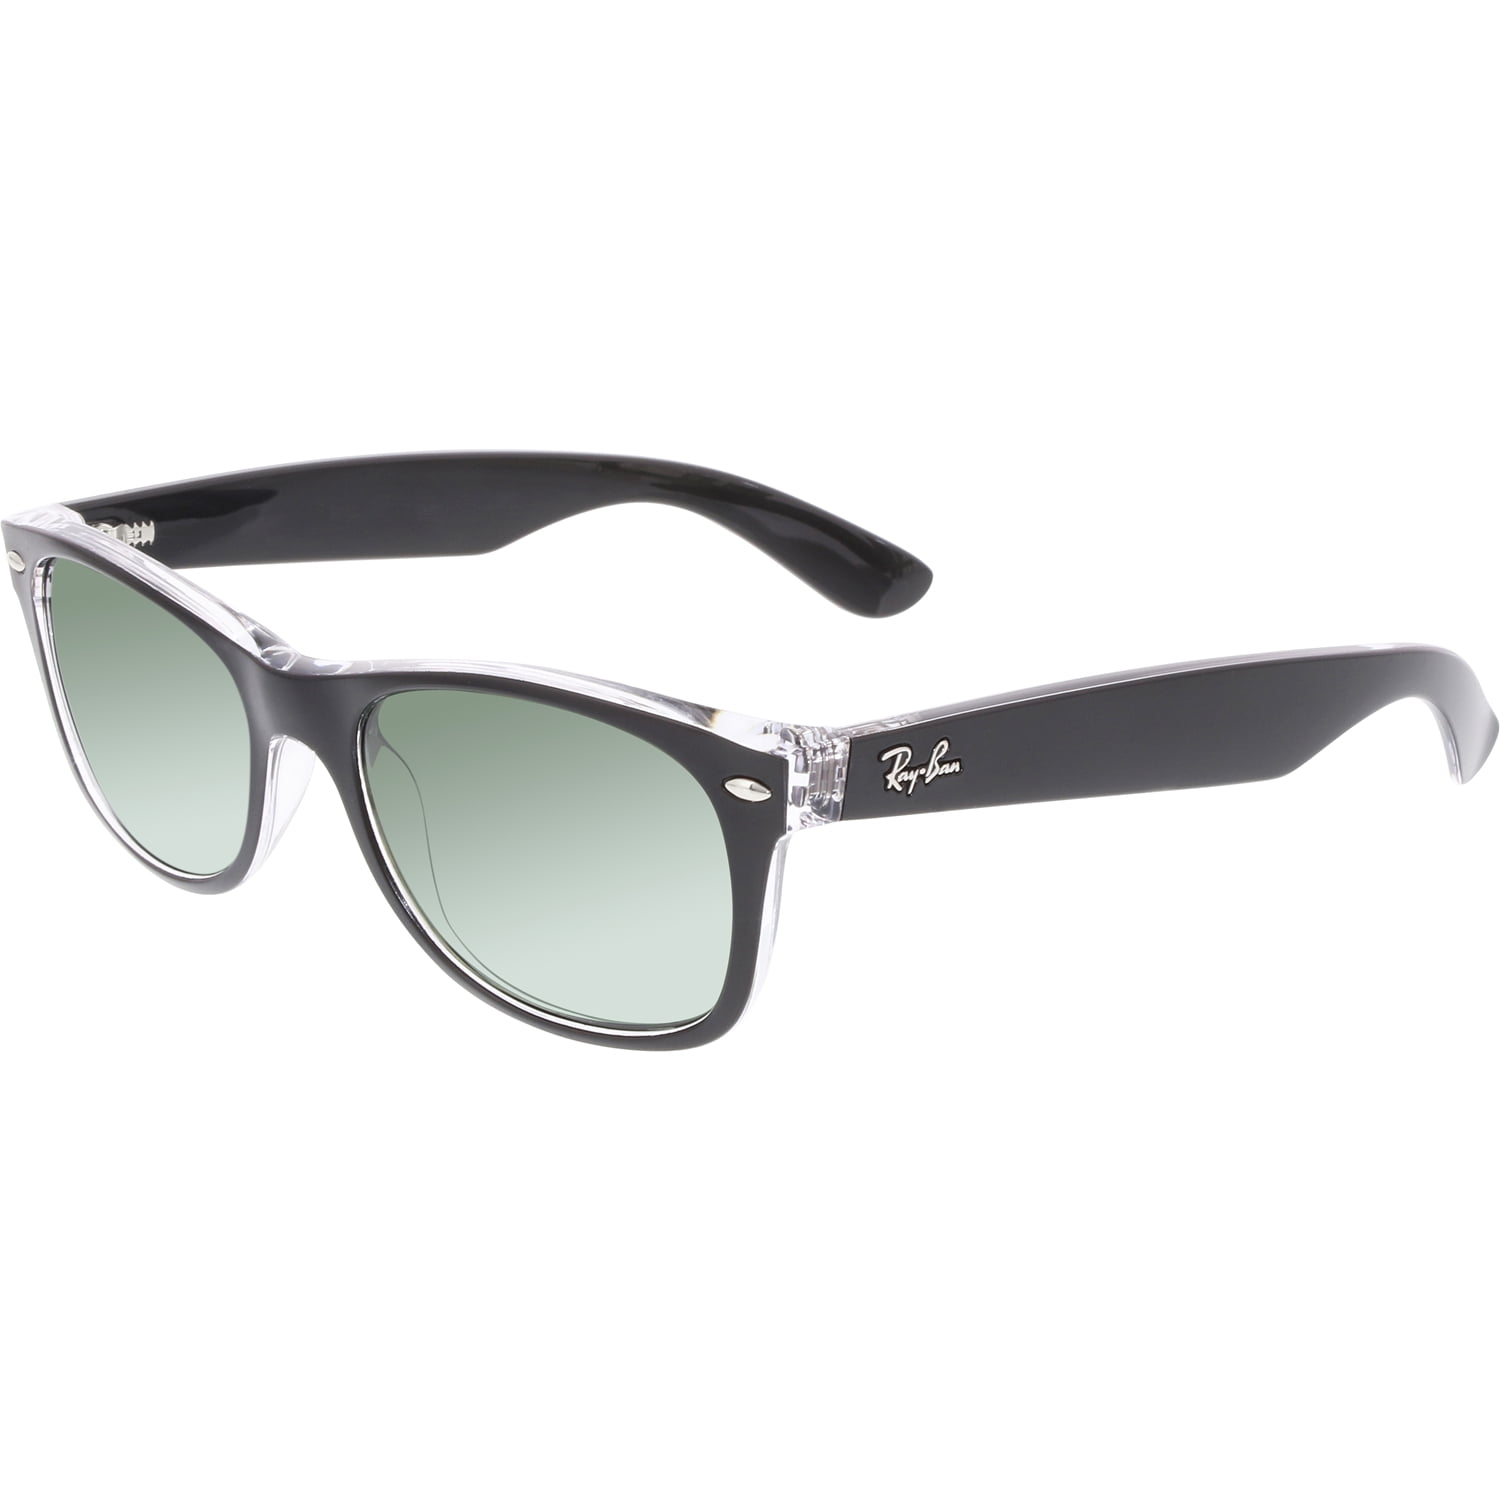 Ray Ban New Wayfarer Classic Polarized Green Sunglasses Rb2132 52 Walmart Com